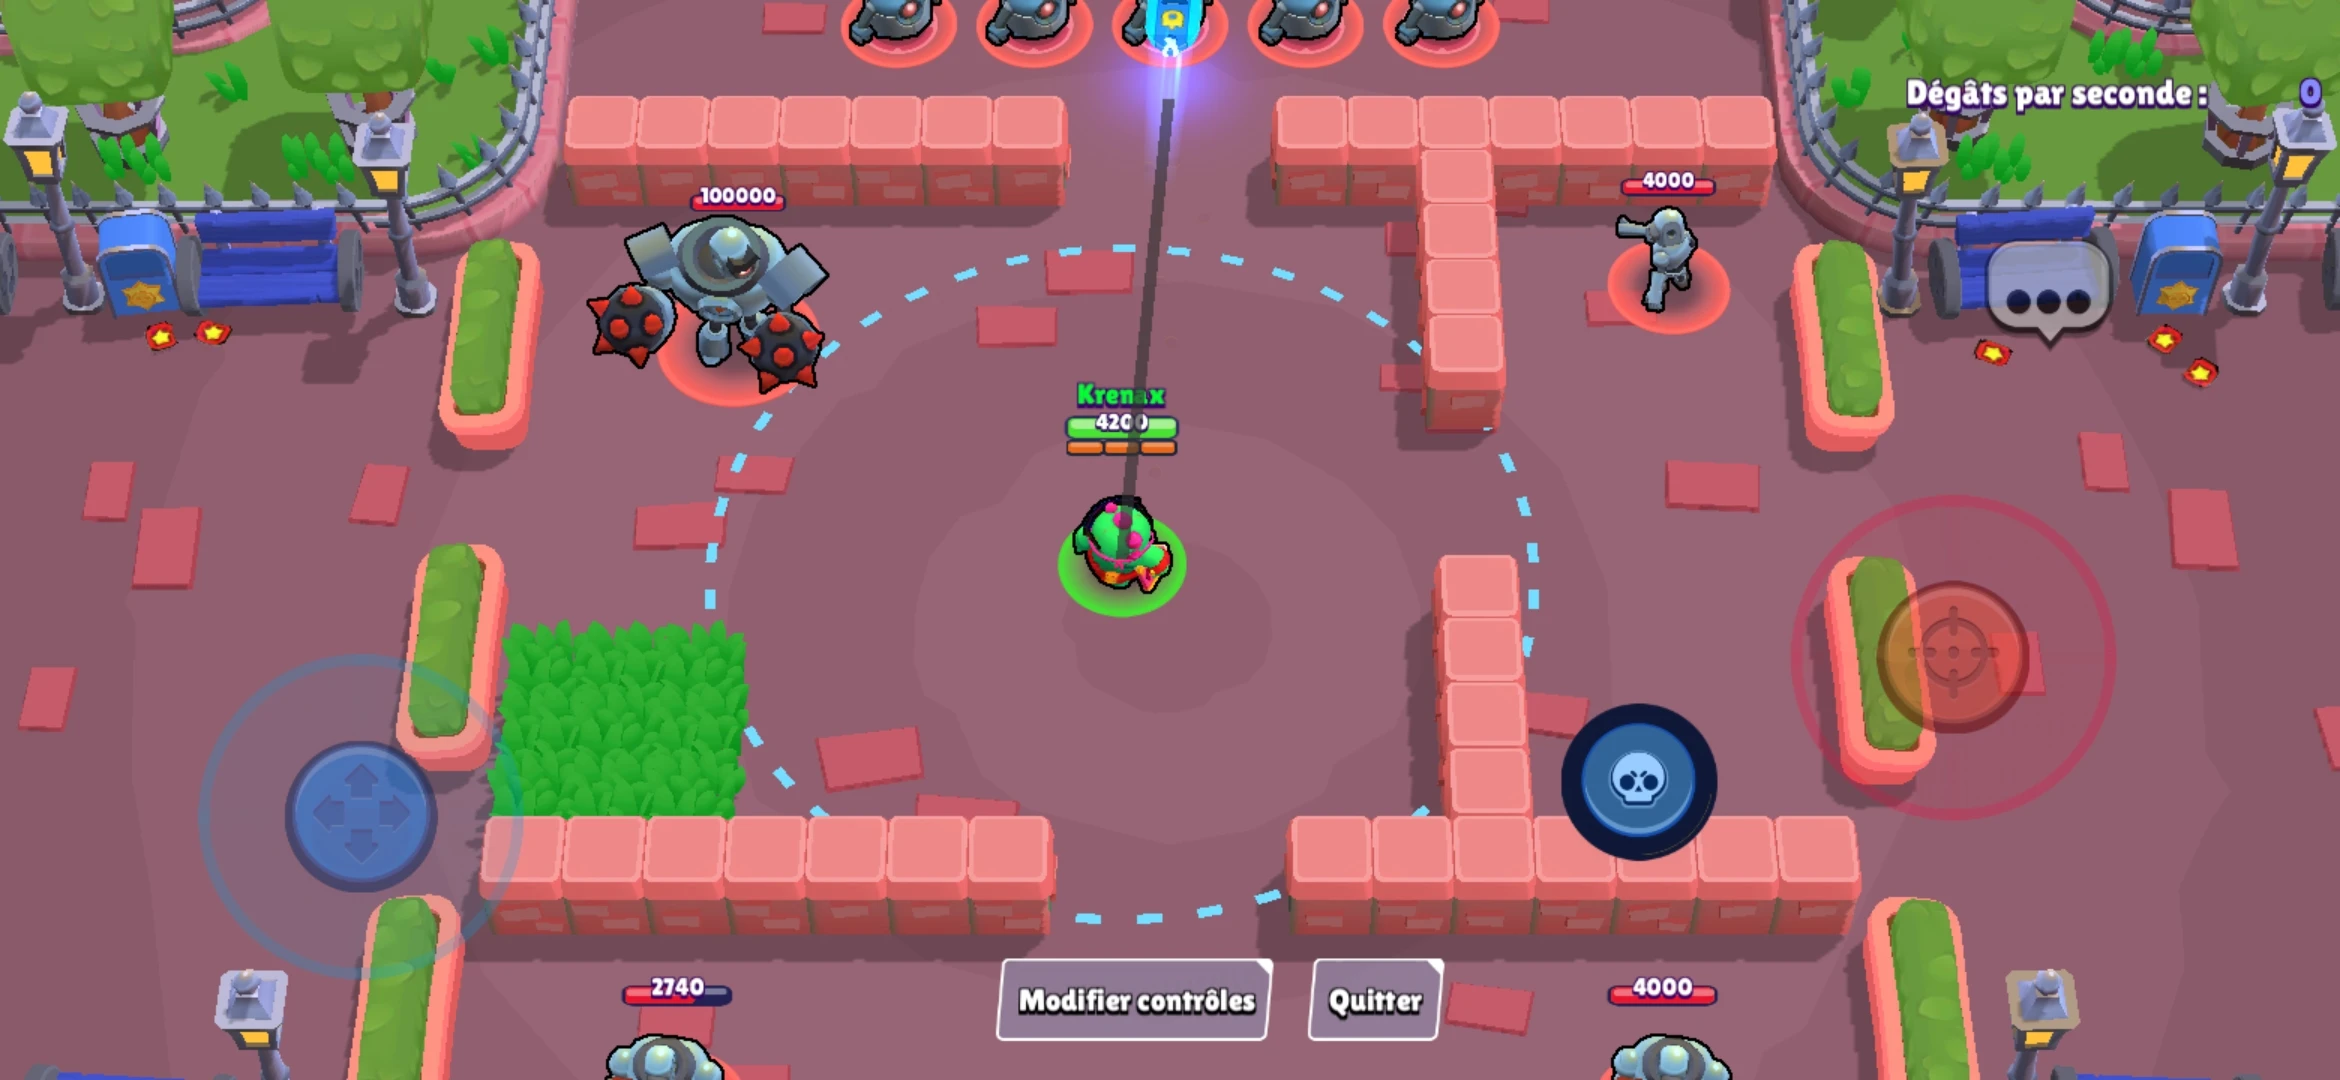 Image de gameplay du brawler Buzz